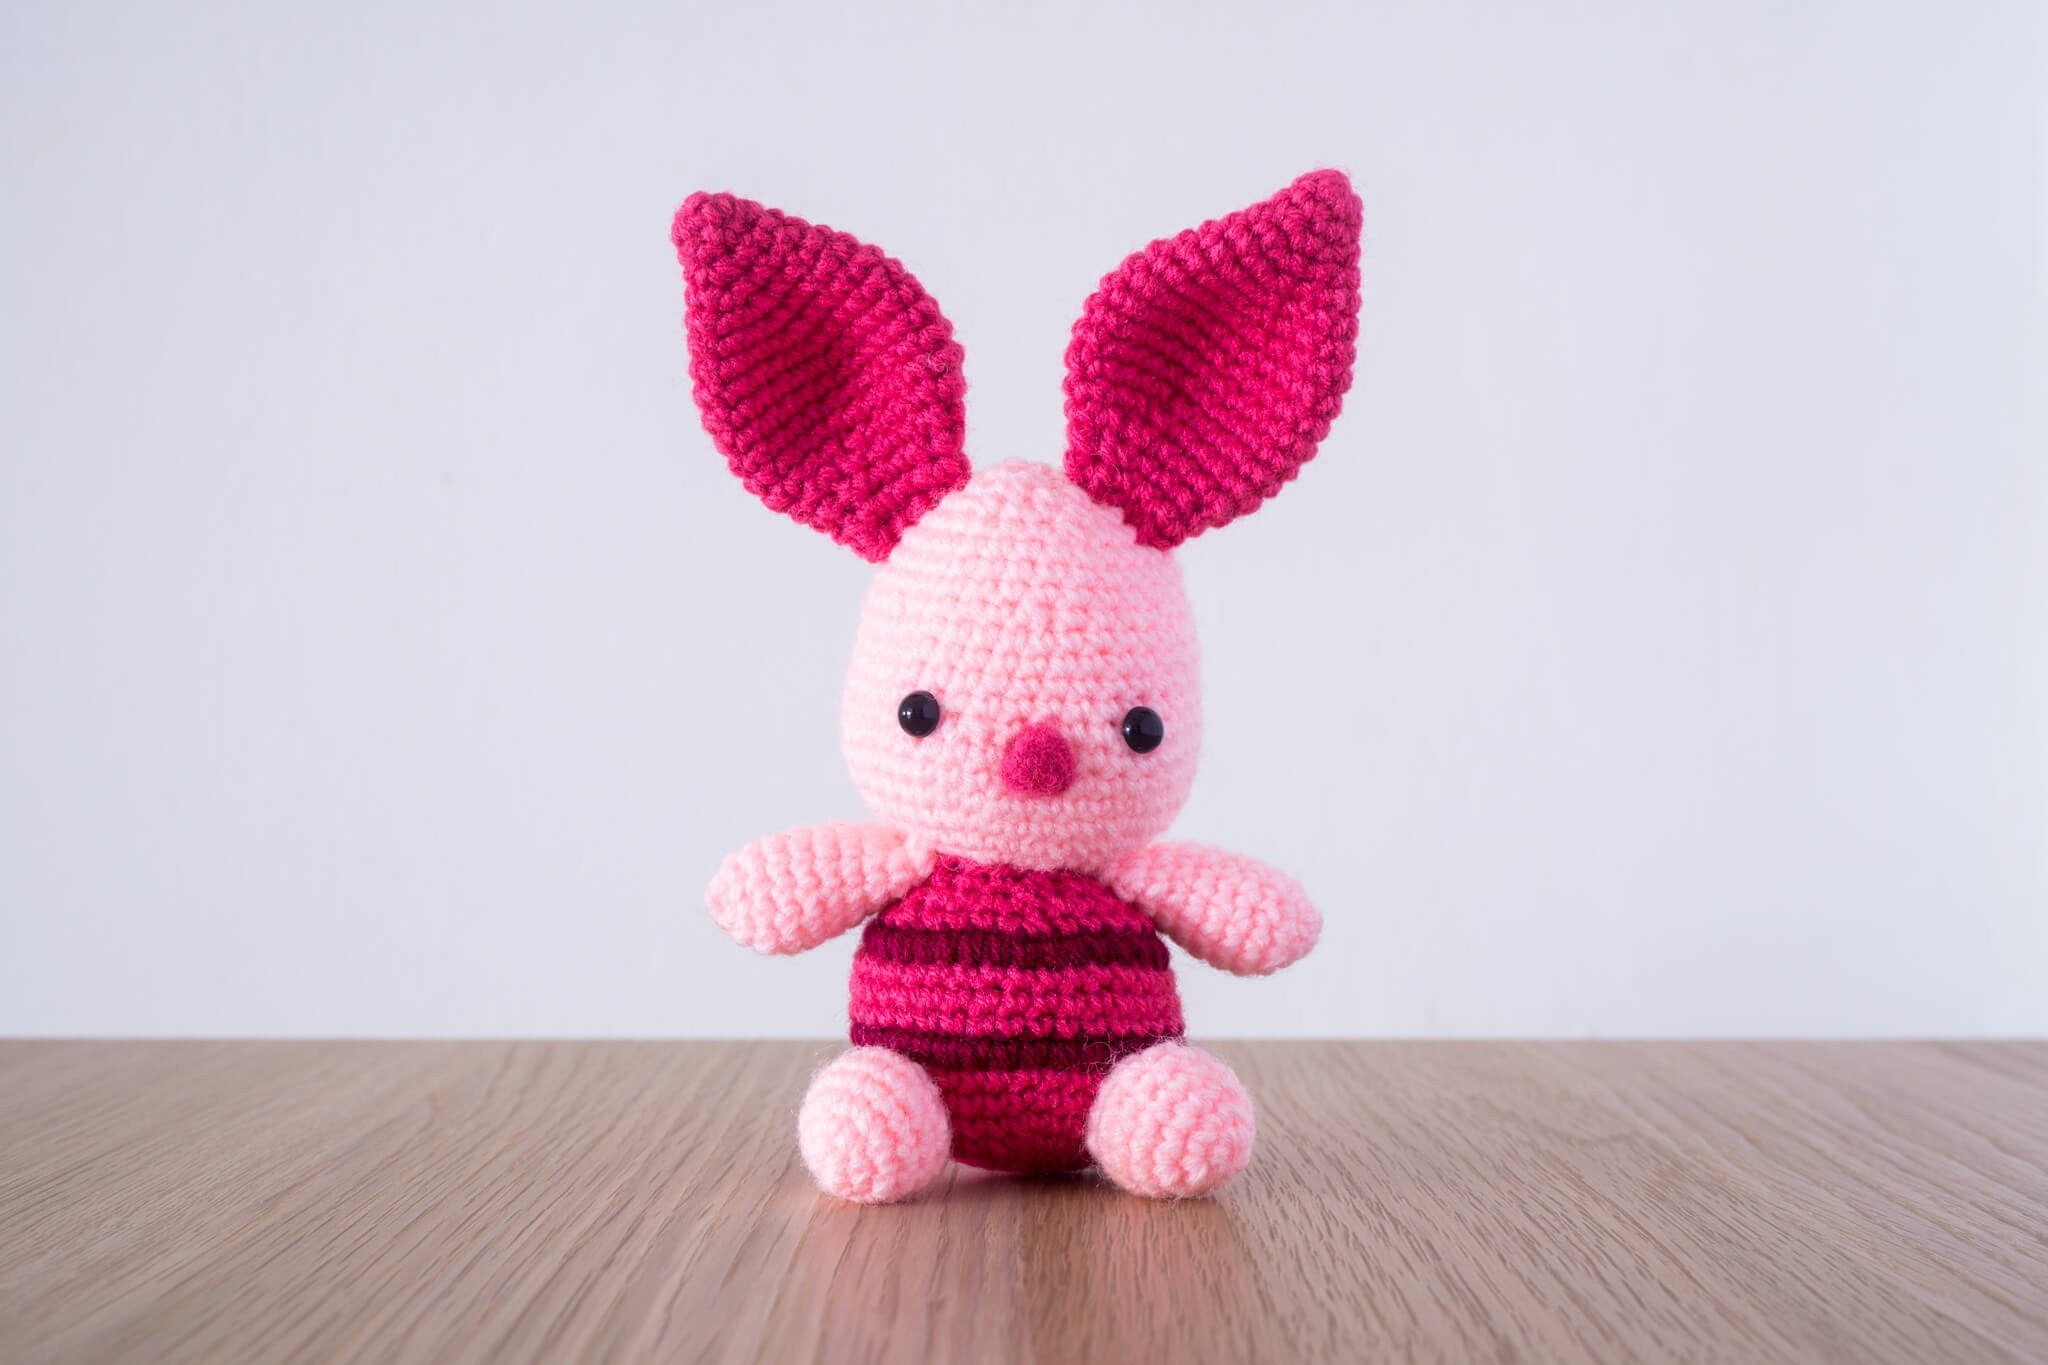 tiny rabbit hole - crochet knit piglet from winnie the pooh amigurumi crochet pattern